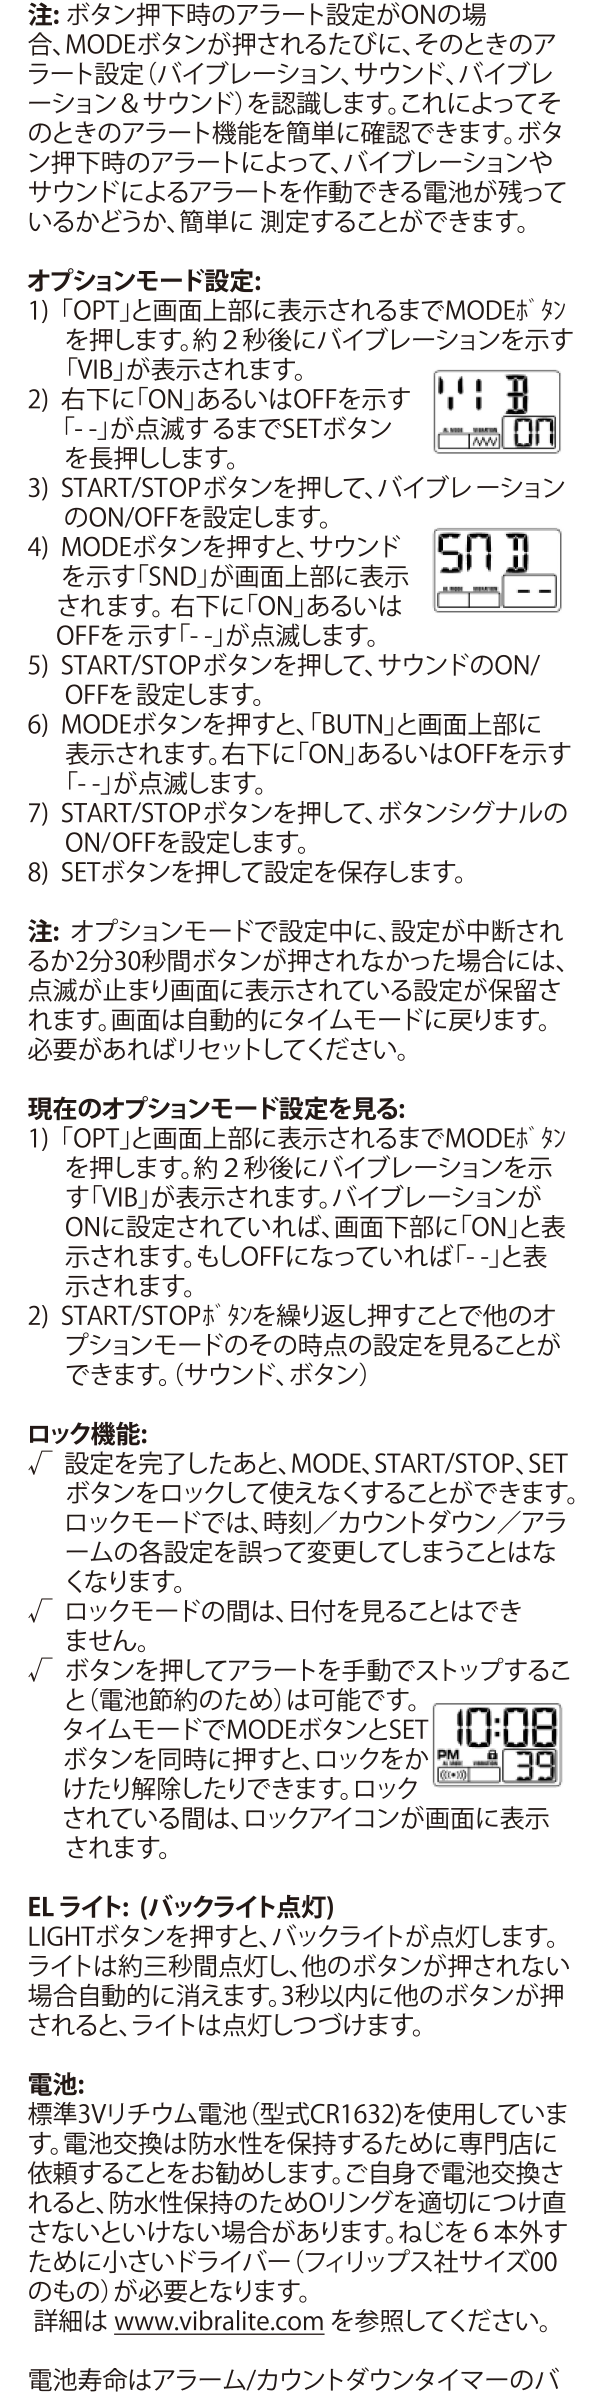 vibralite-mini-japanese-instruction-manual-page-4